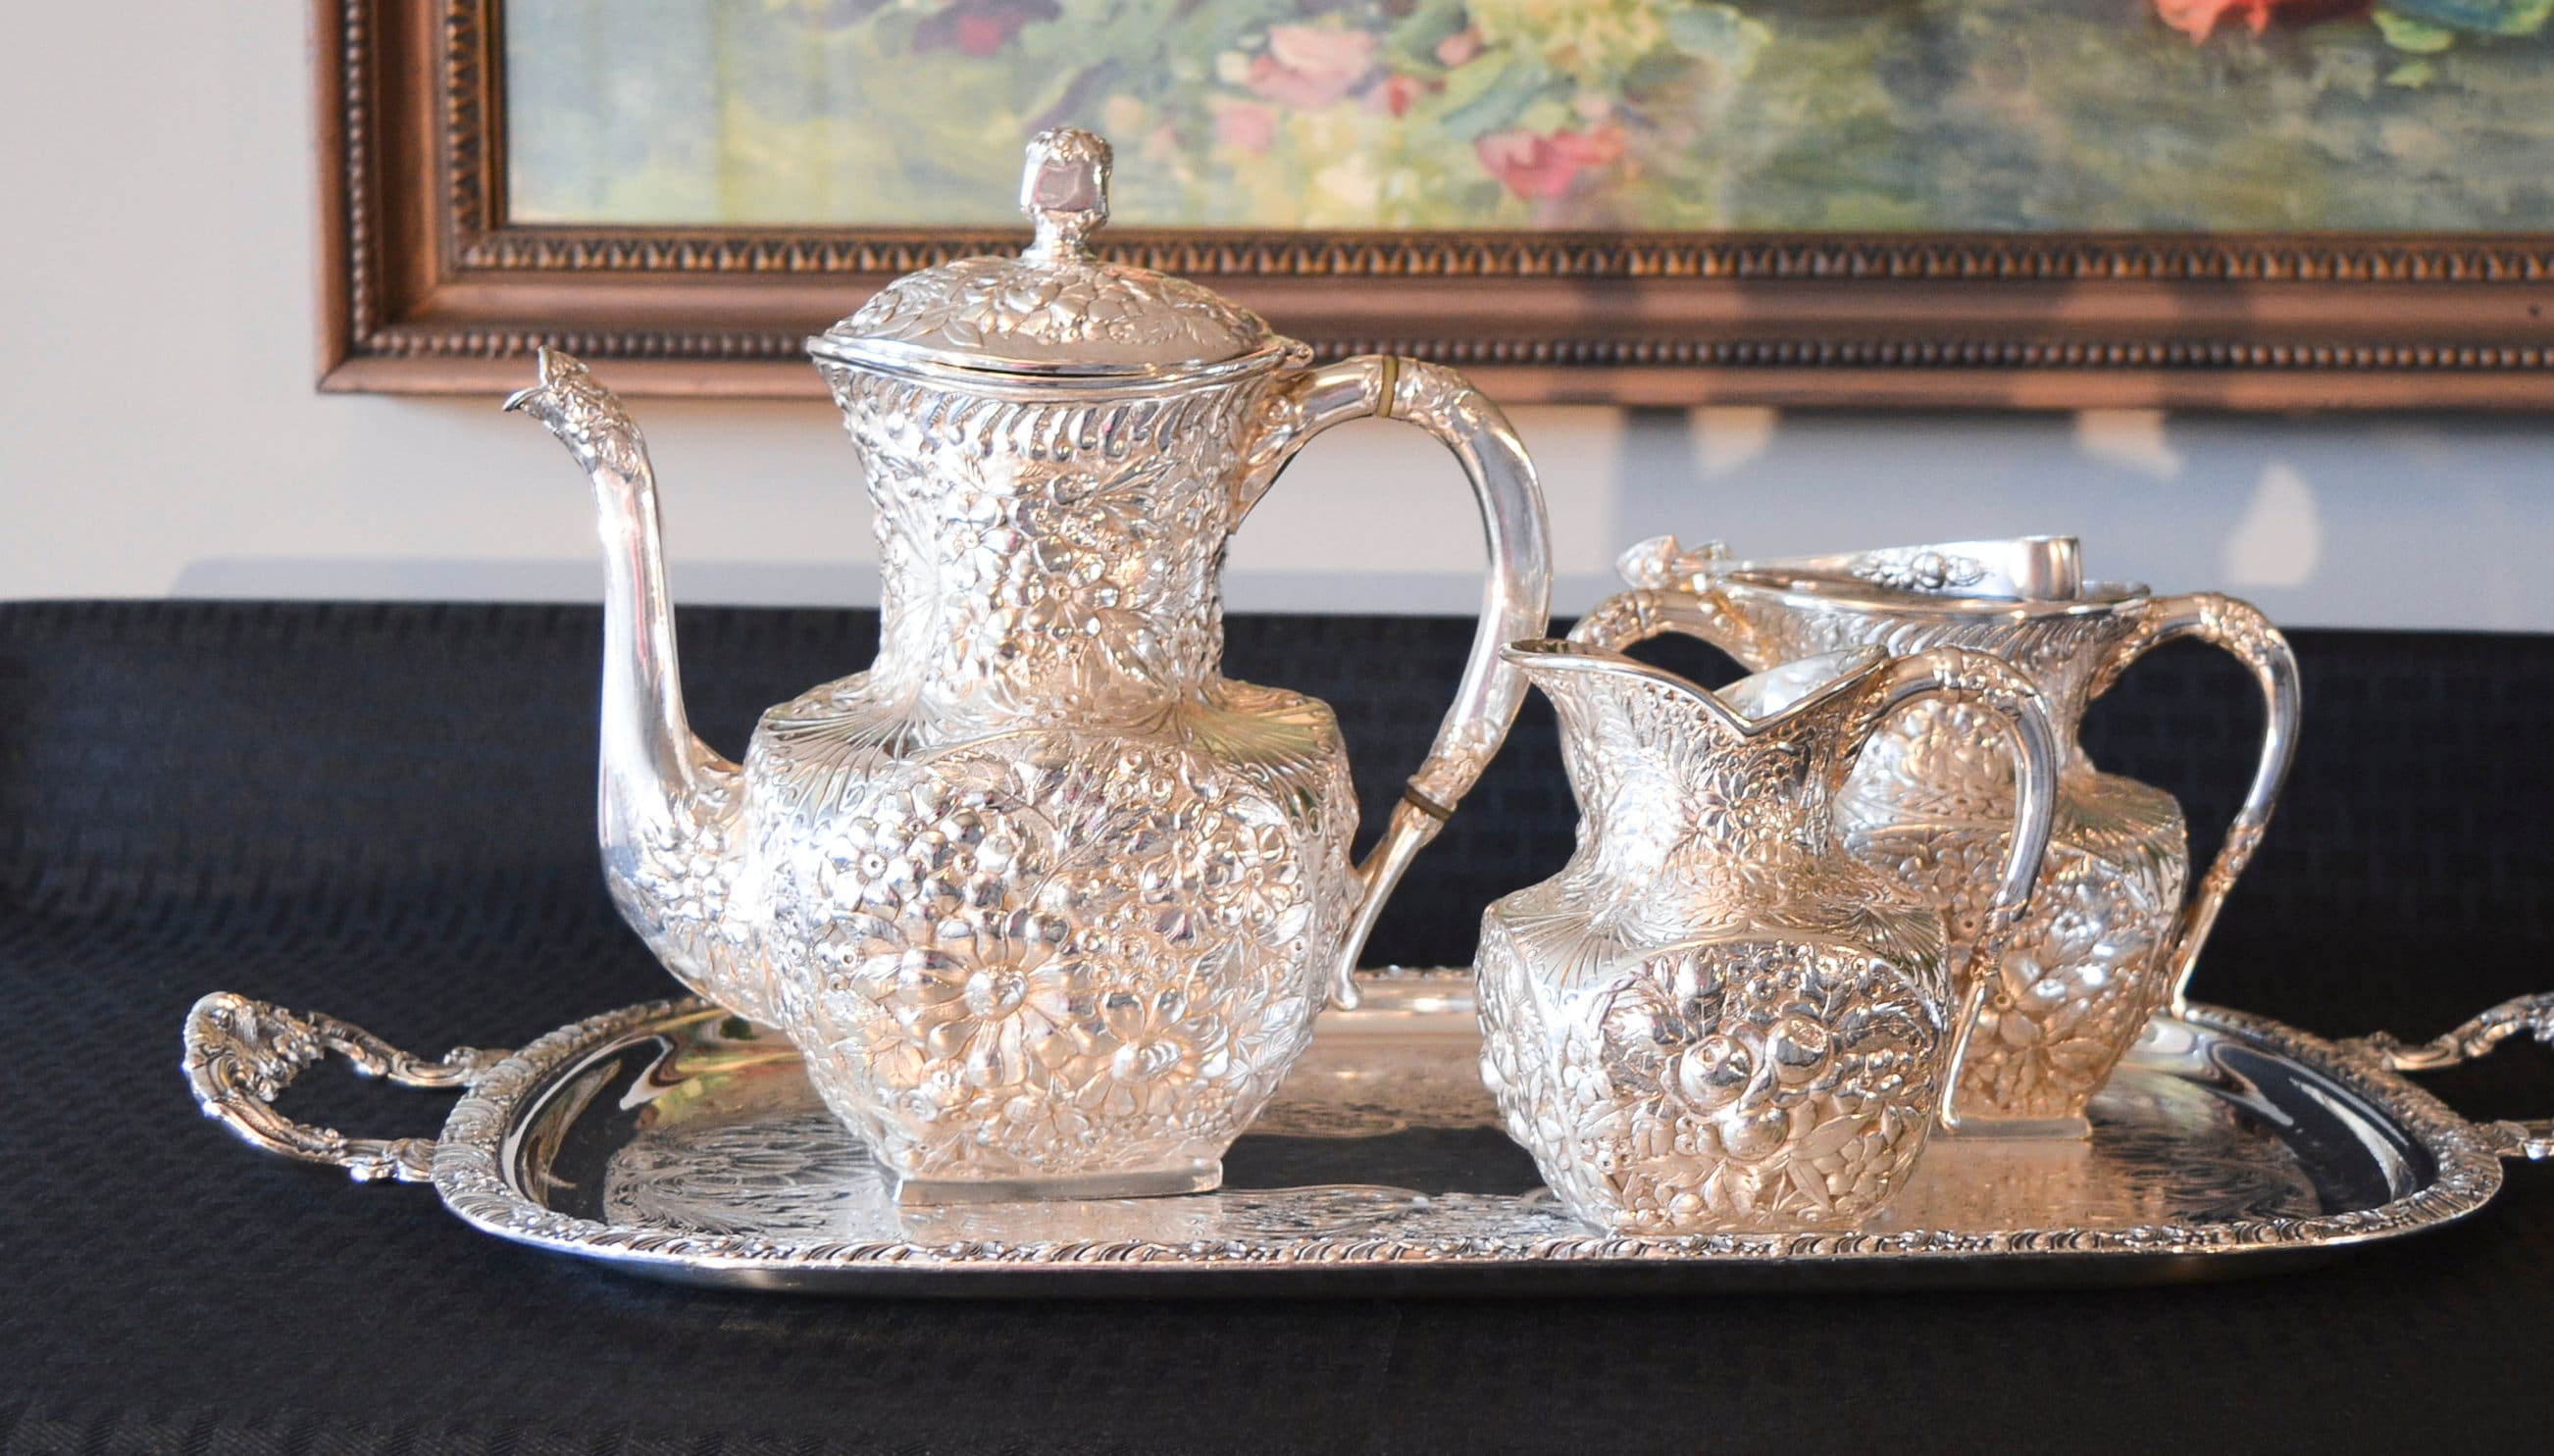 Ware Tea Cup Set Metal Service Silver Tray Interior Home Kitchen a